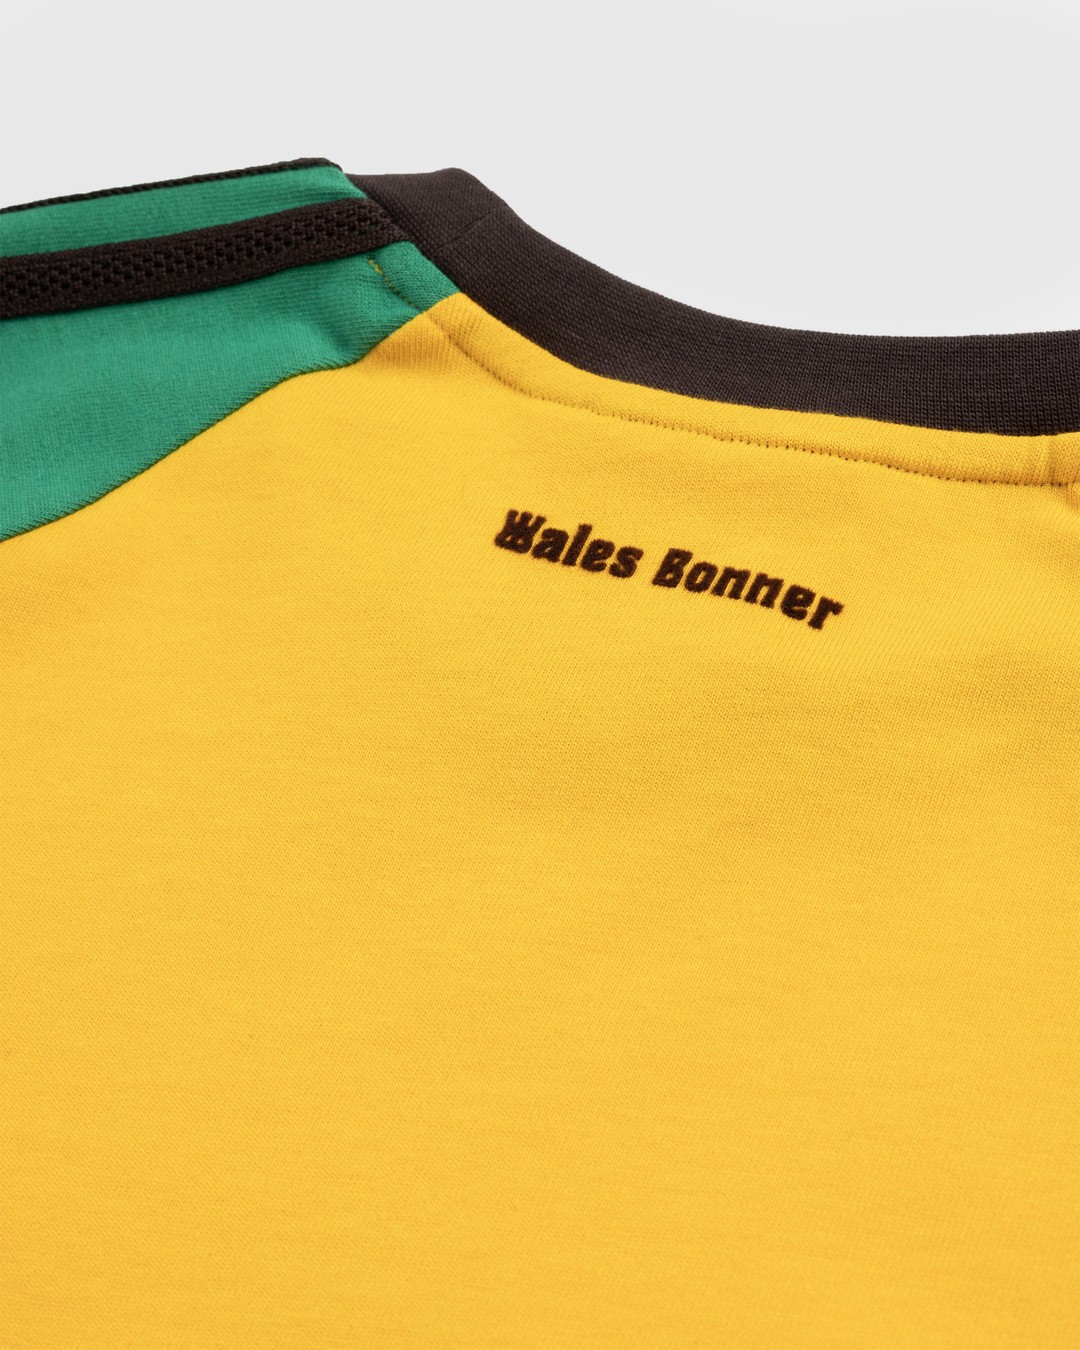 Adidas x Wales Bonner – Organic Cotton Tee Collegiate Gold - T-shirts - Yellow - Image 5